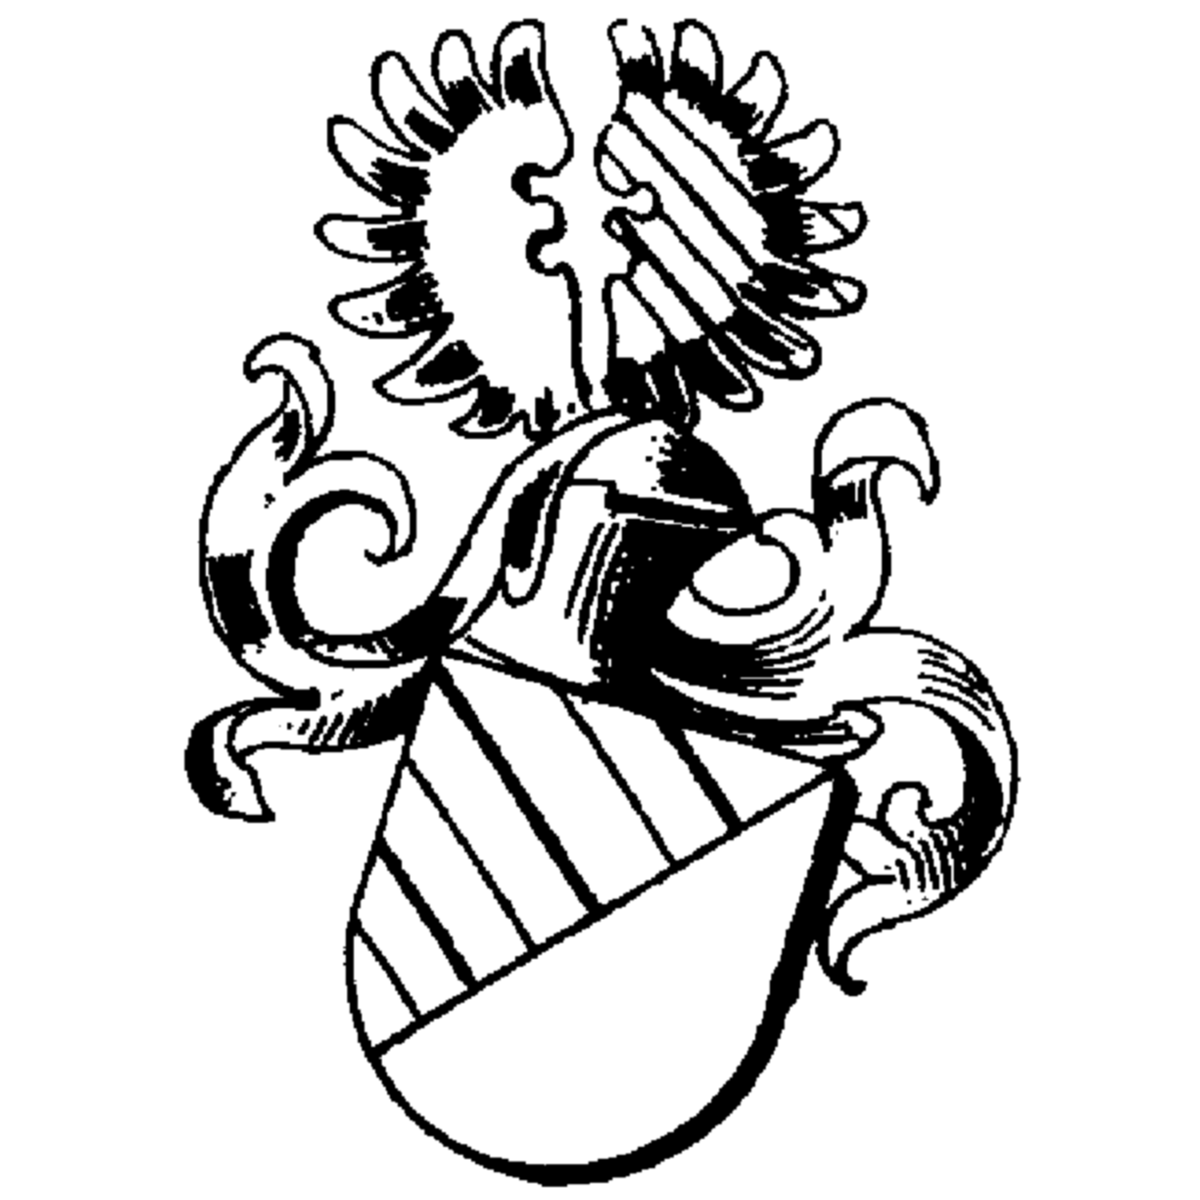 Coat of arms of family Rauhbart